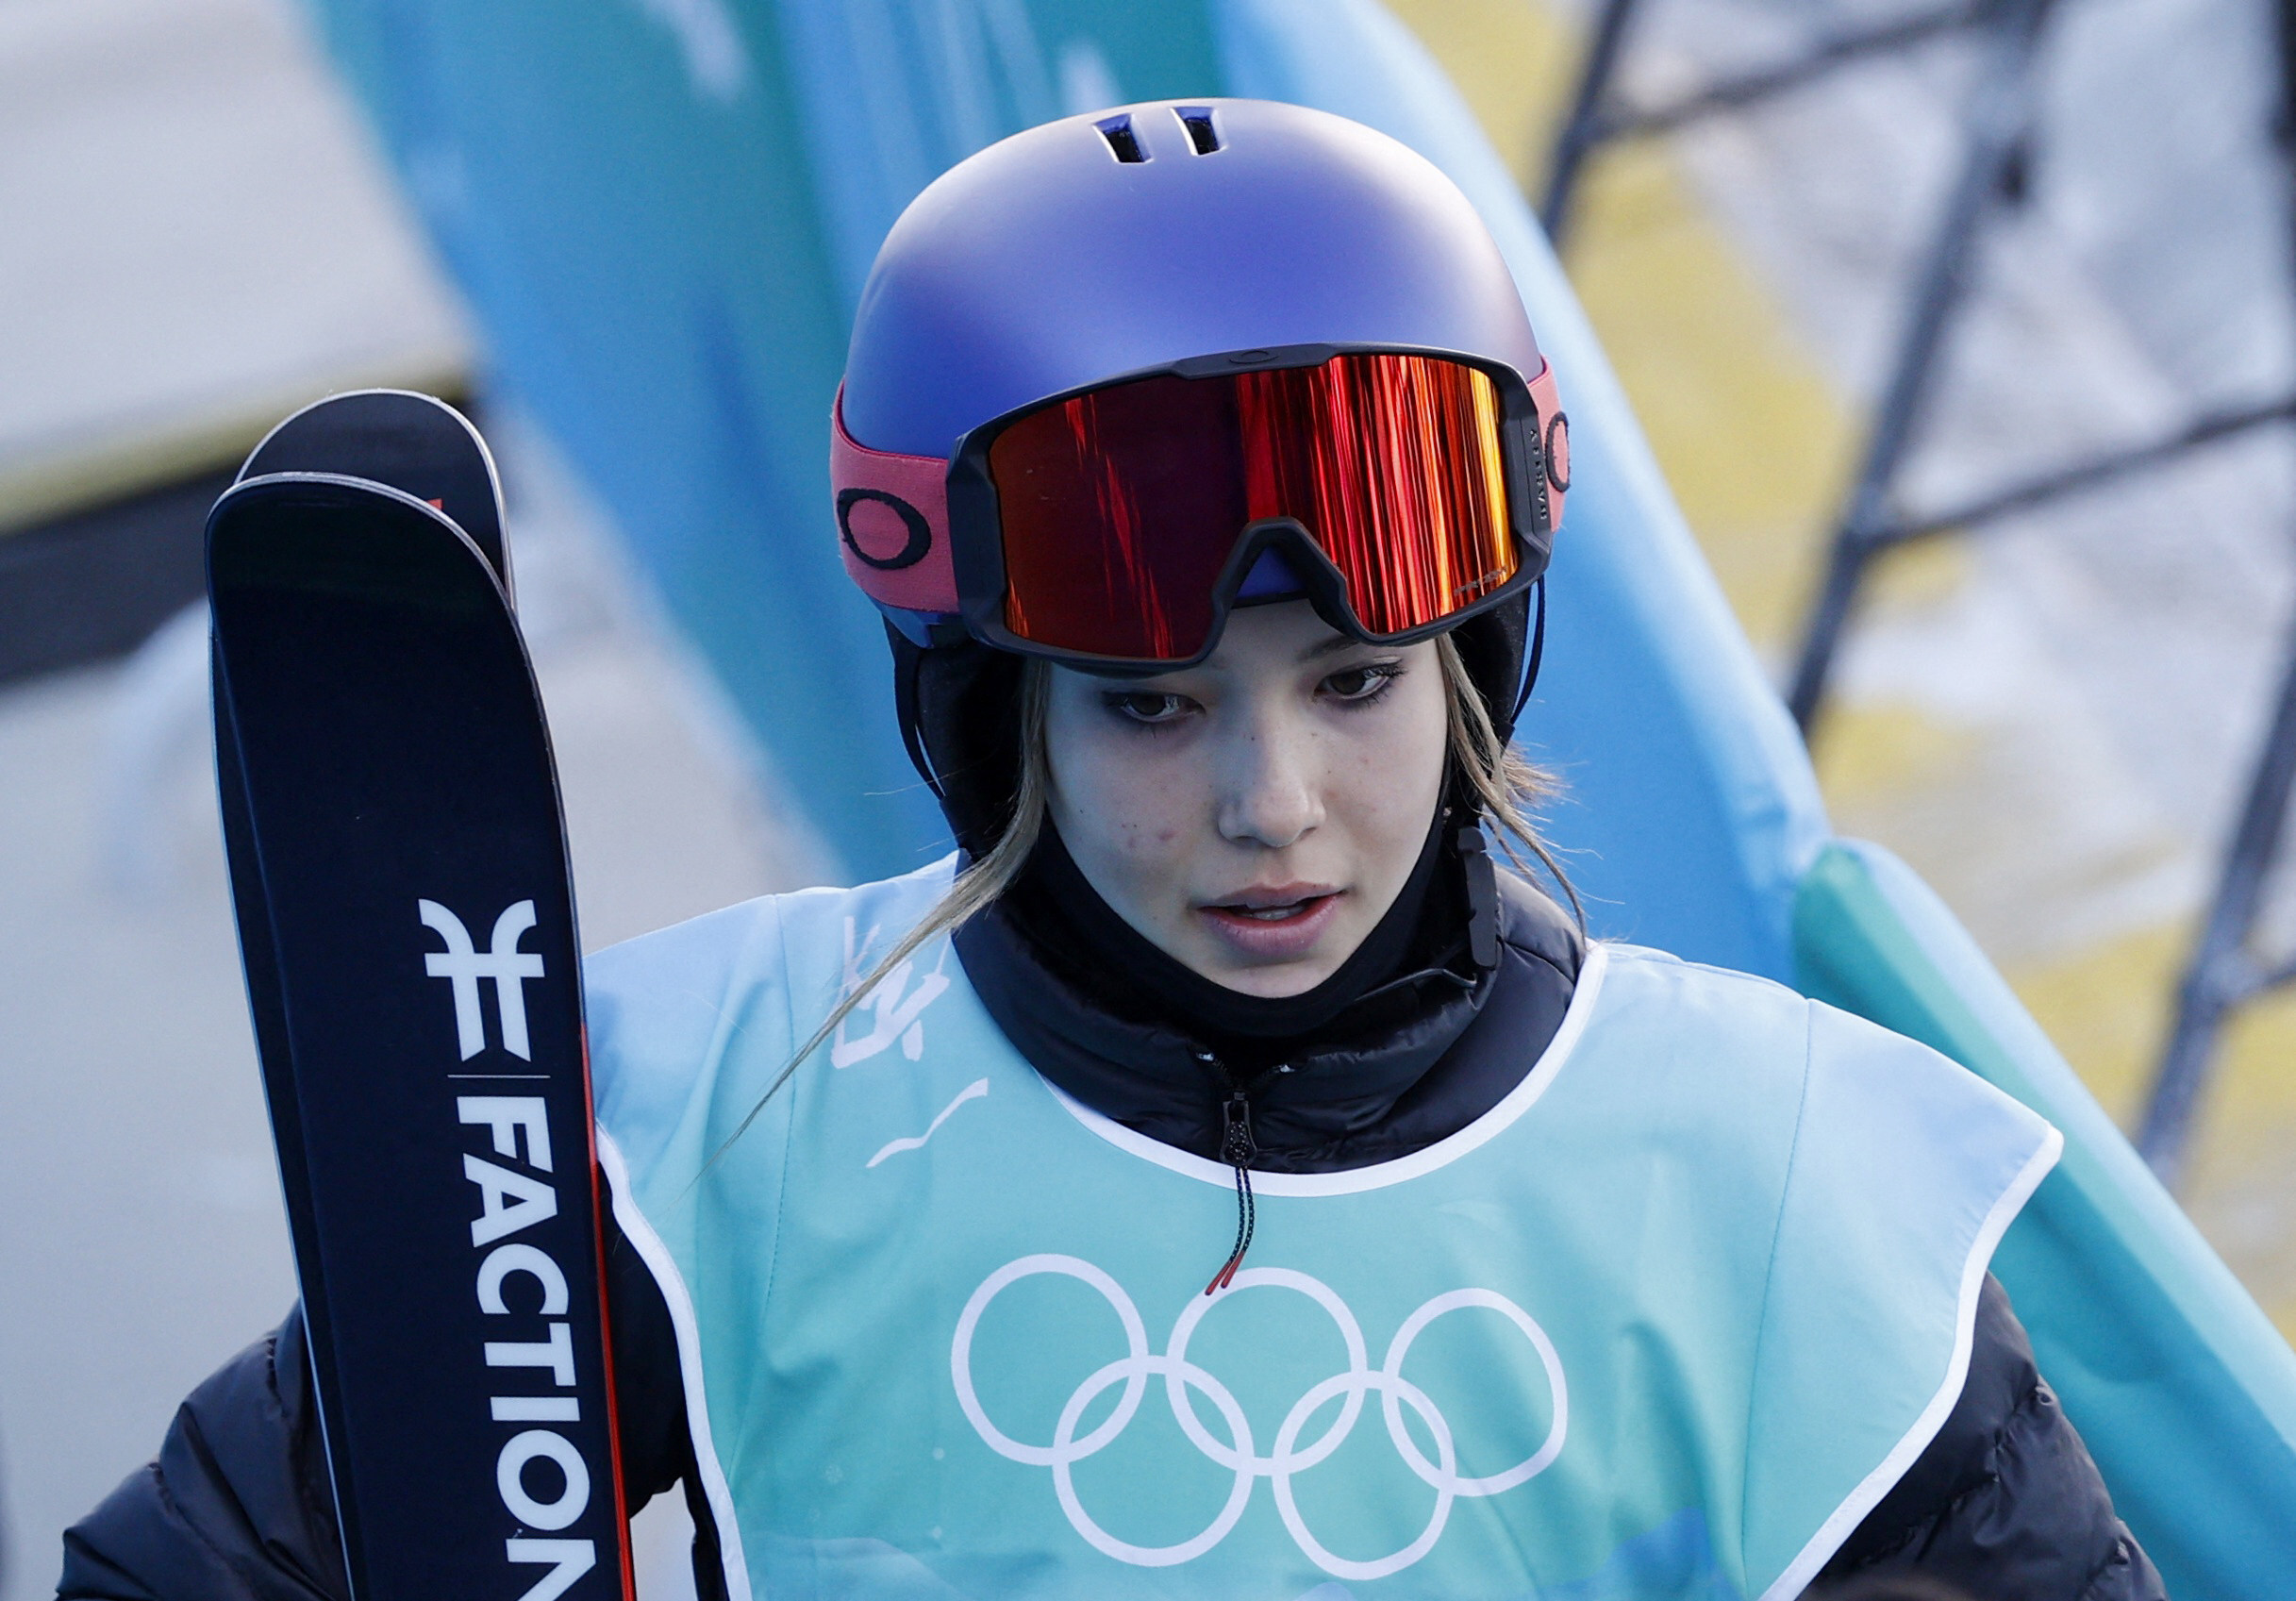 Olympics star Eileen Gu misses Winter X after practice crash